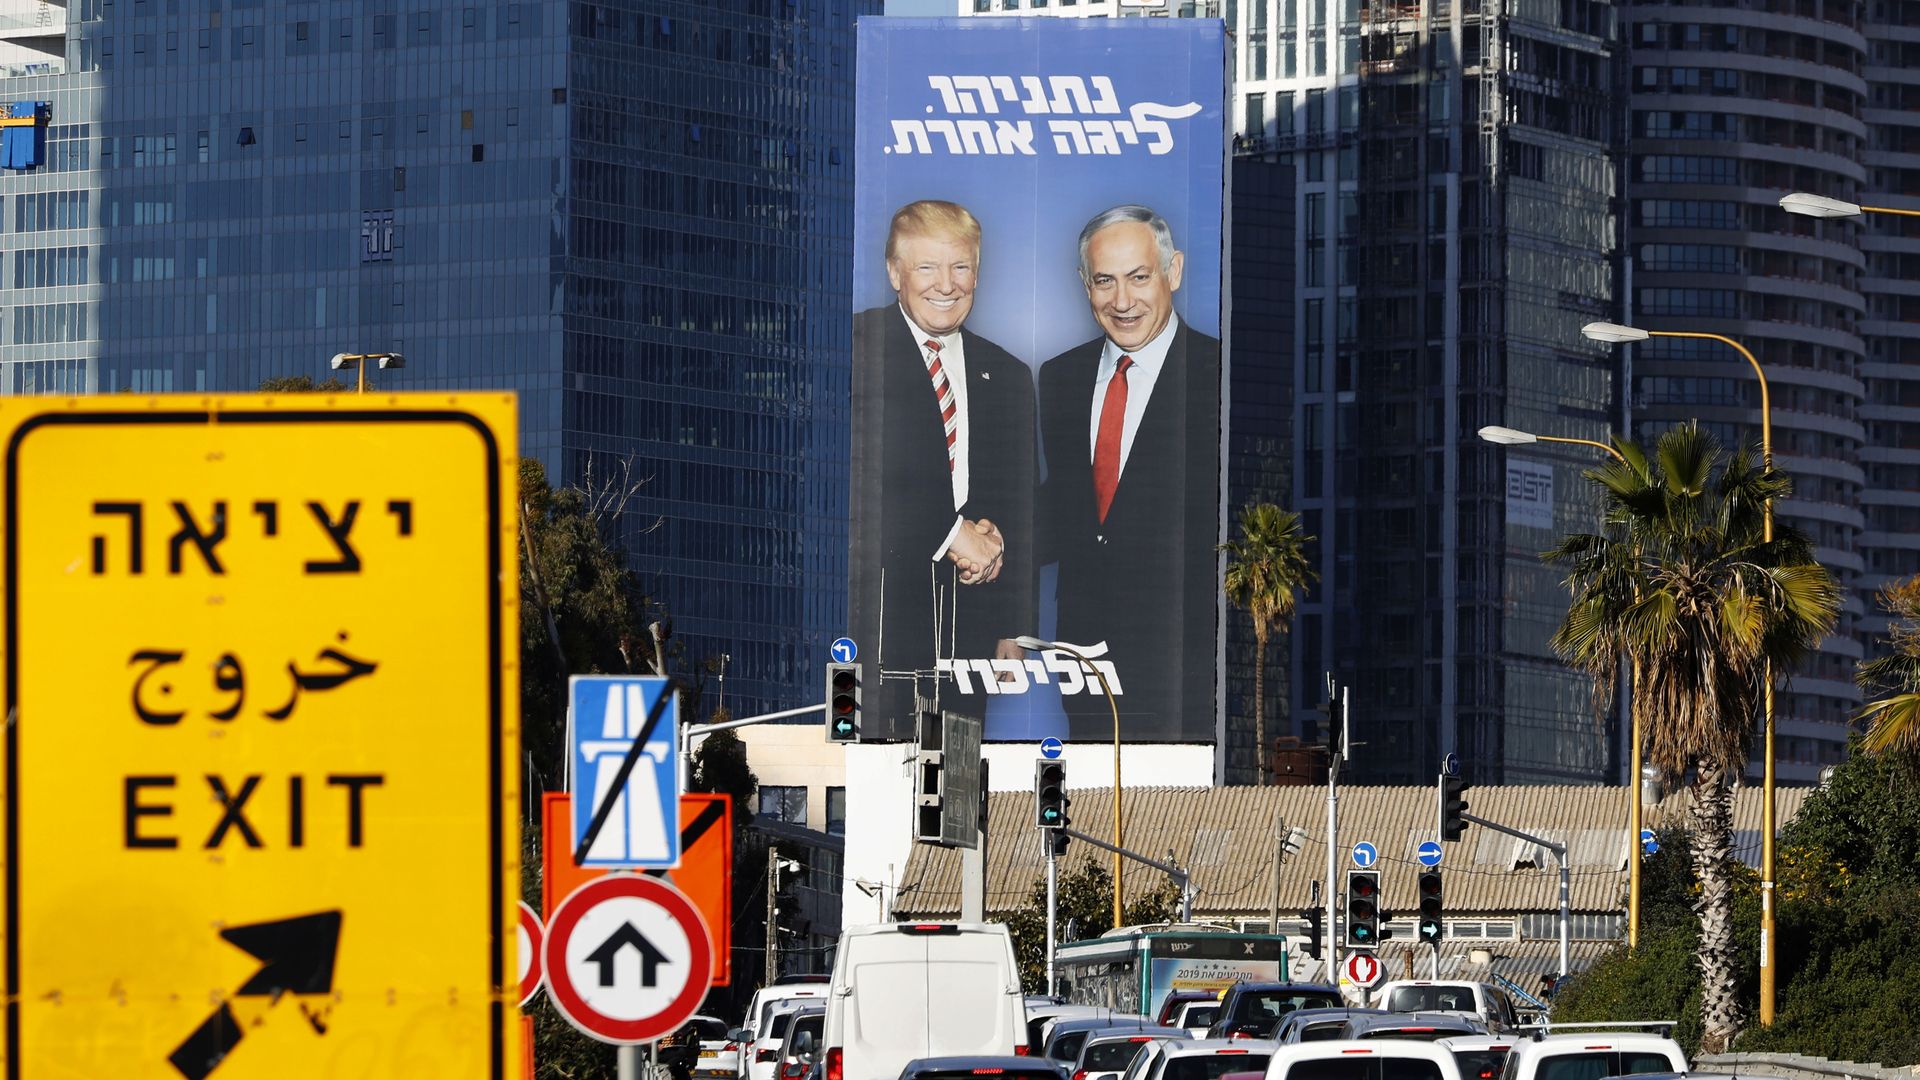 Billboard of Netanyahu and Trump in Israel